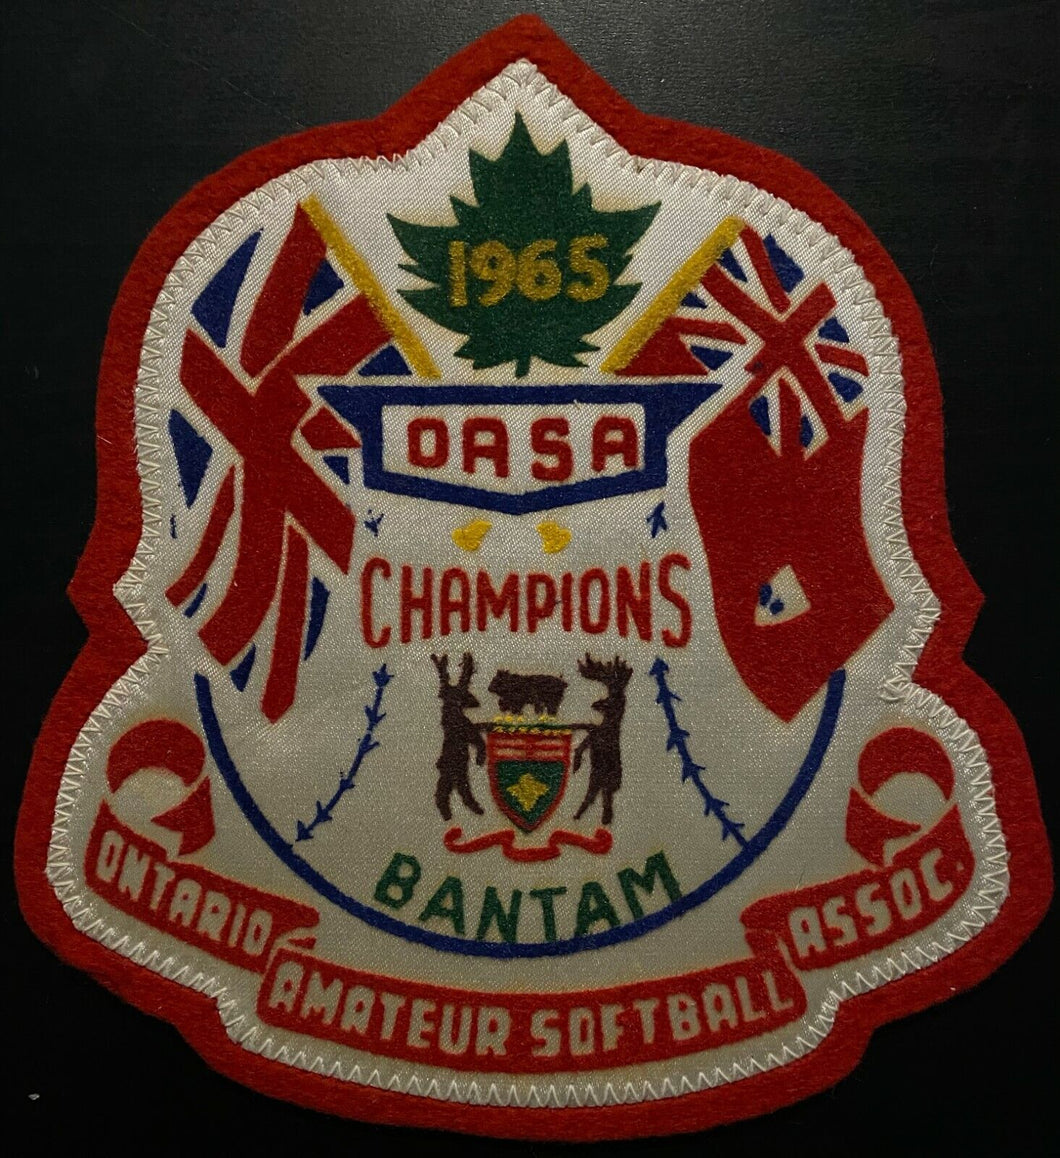 1965 Ontario Amateur Softball Association Champions Patch Vintage